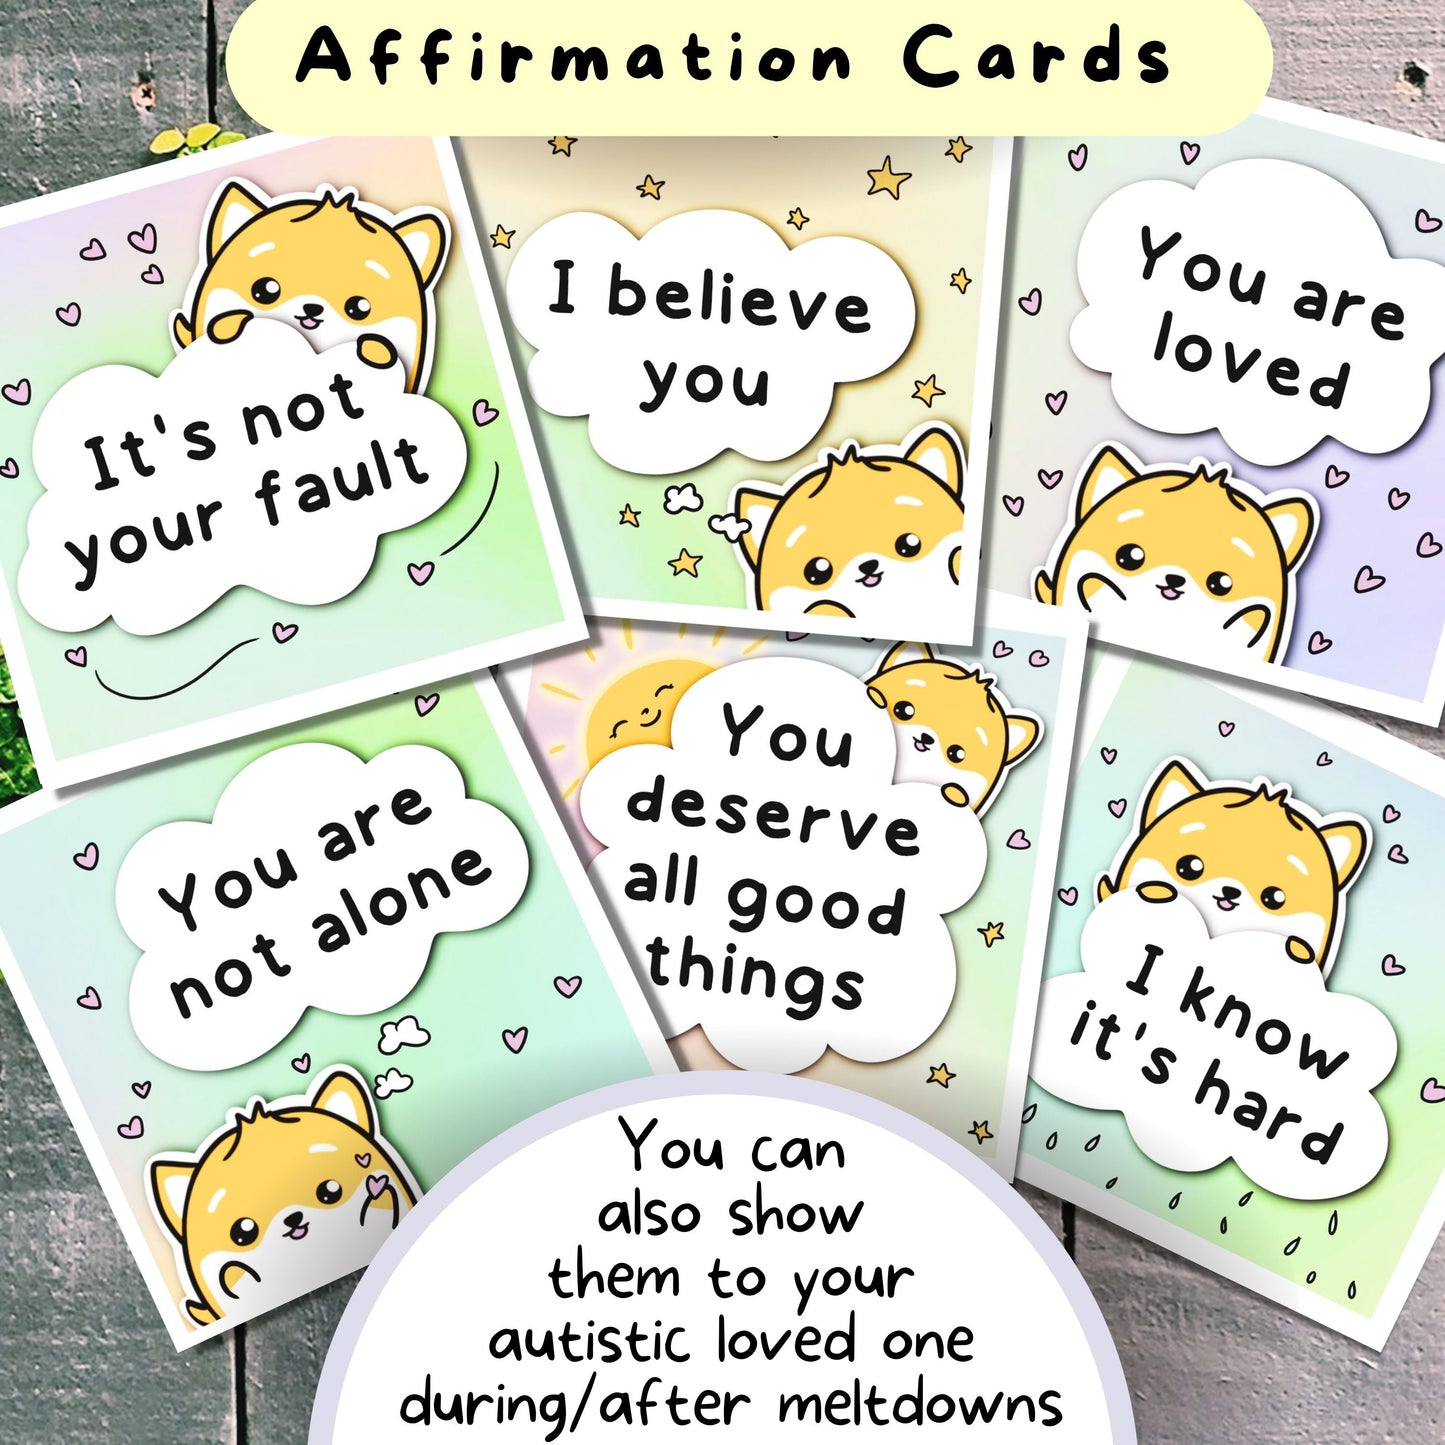 Communication Cards & Affirmation Cards (Digital) ft. Kifli, the Dog - for Institutions